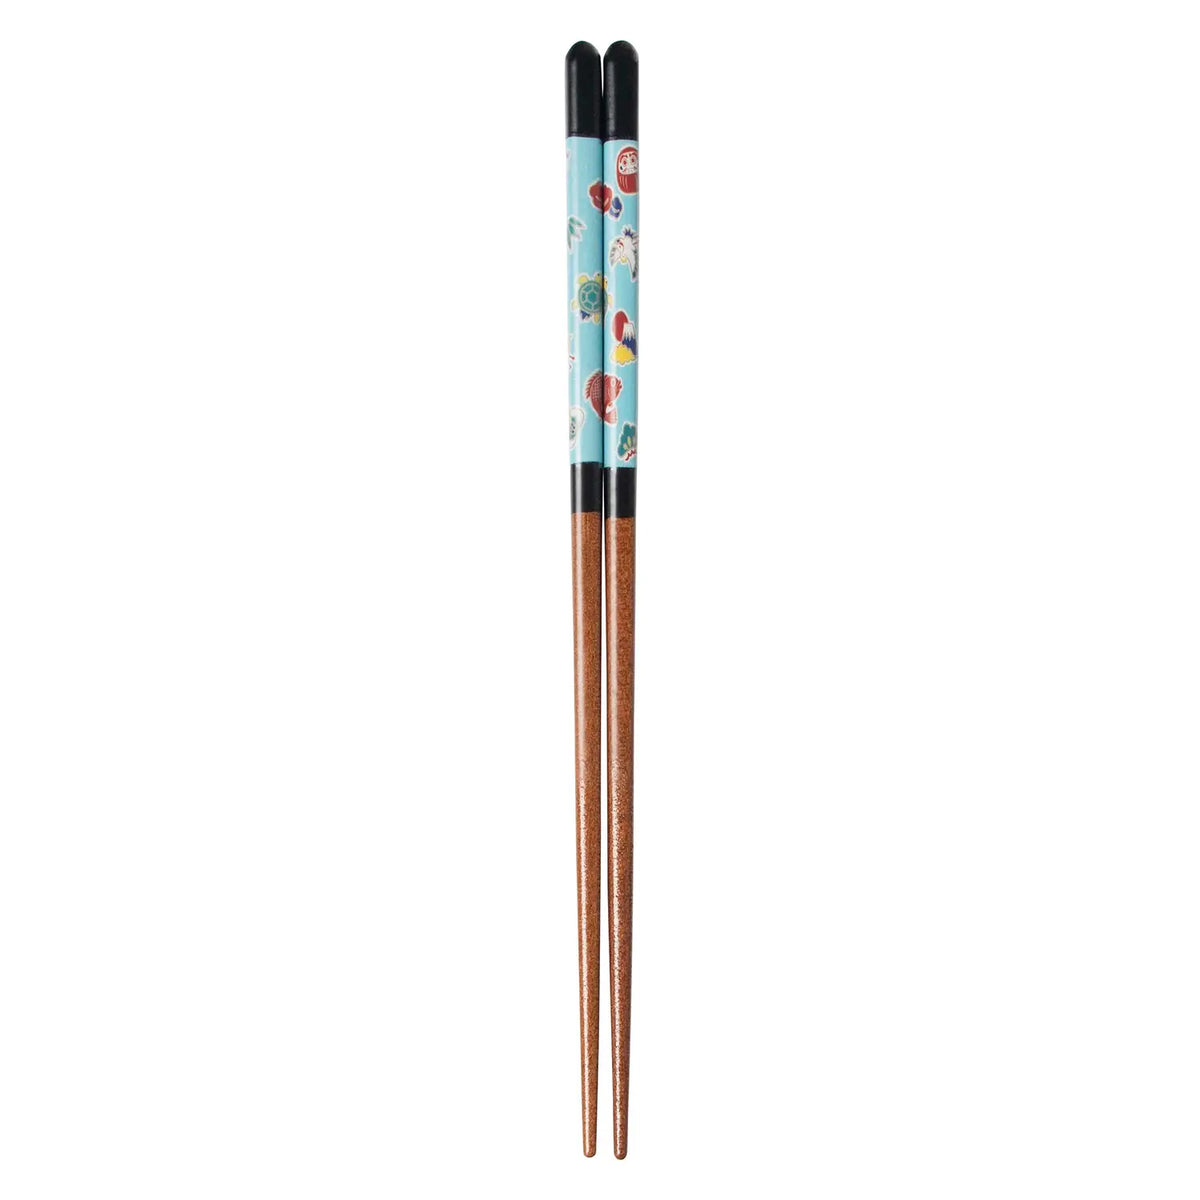 SEIKOU Wakasa Lacquered Natural Wood Chopsticks 23cm Black Engimono